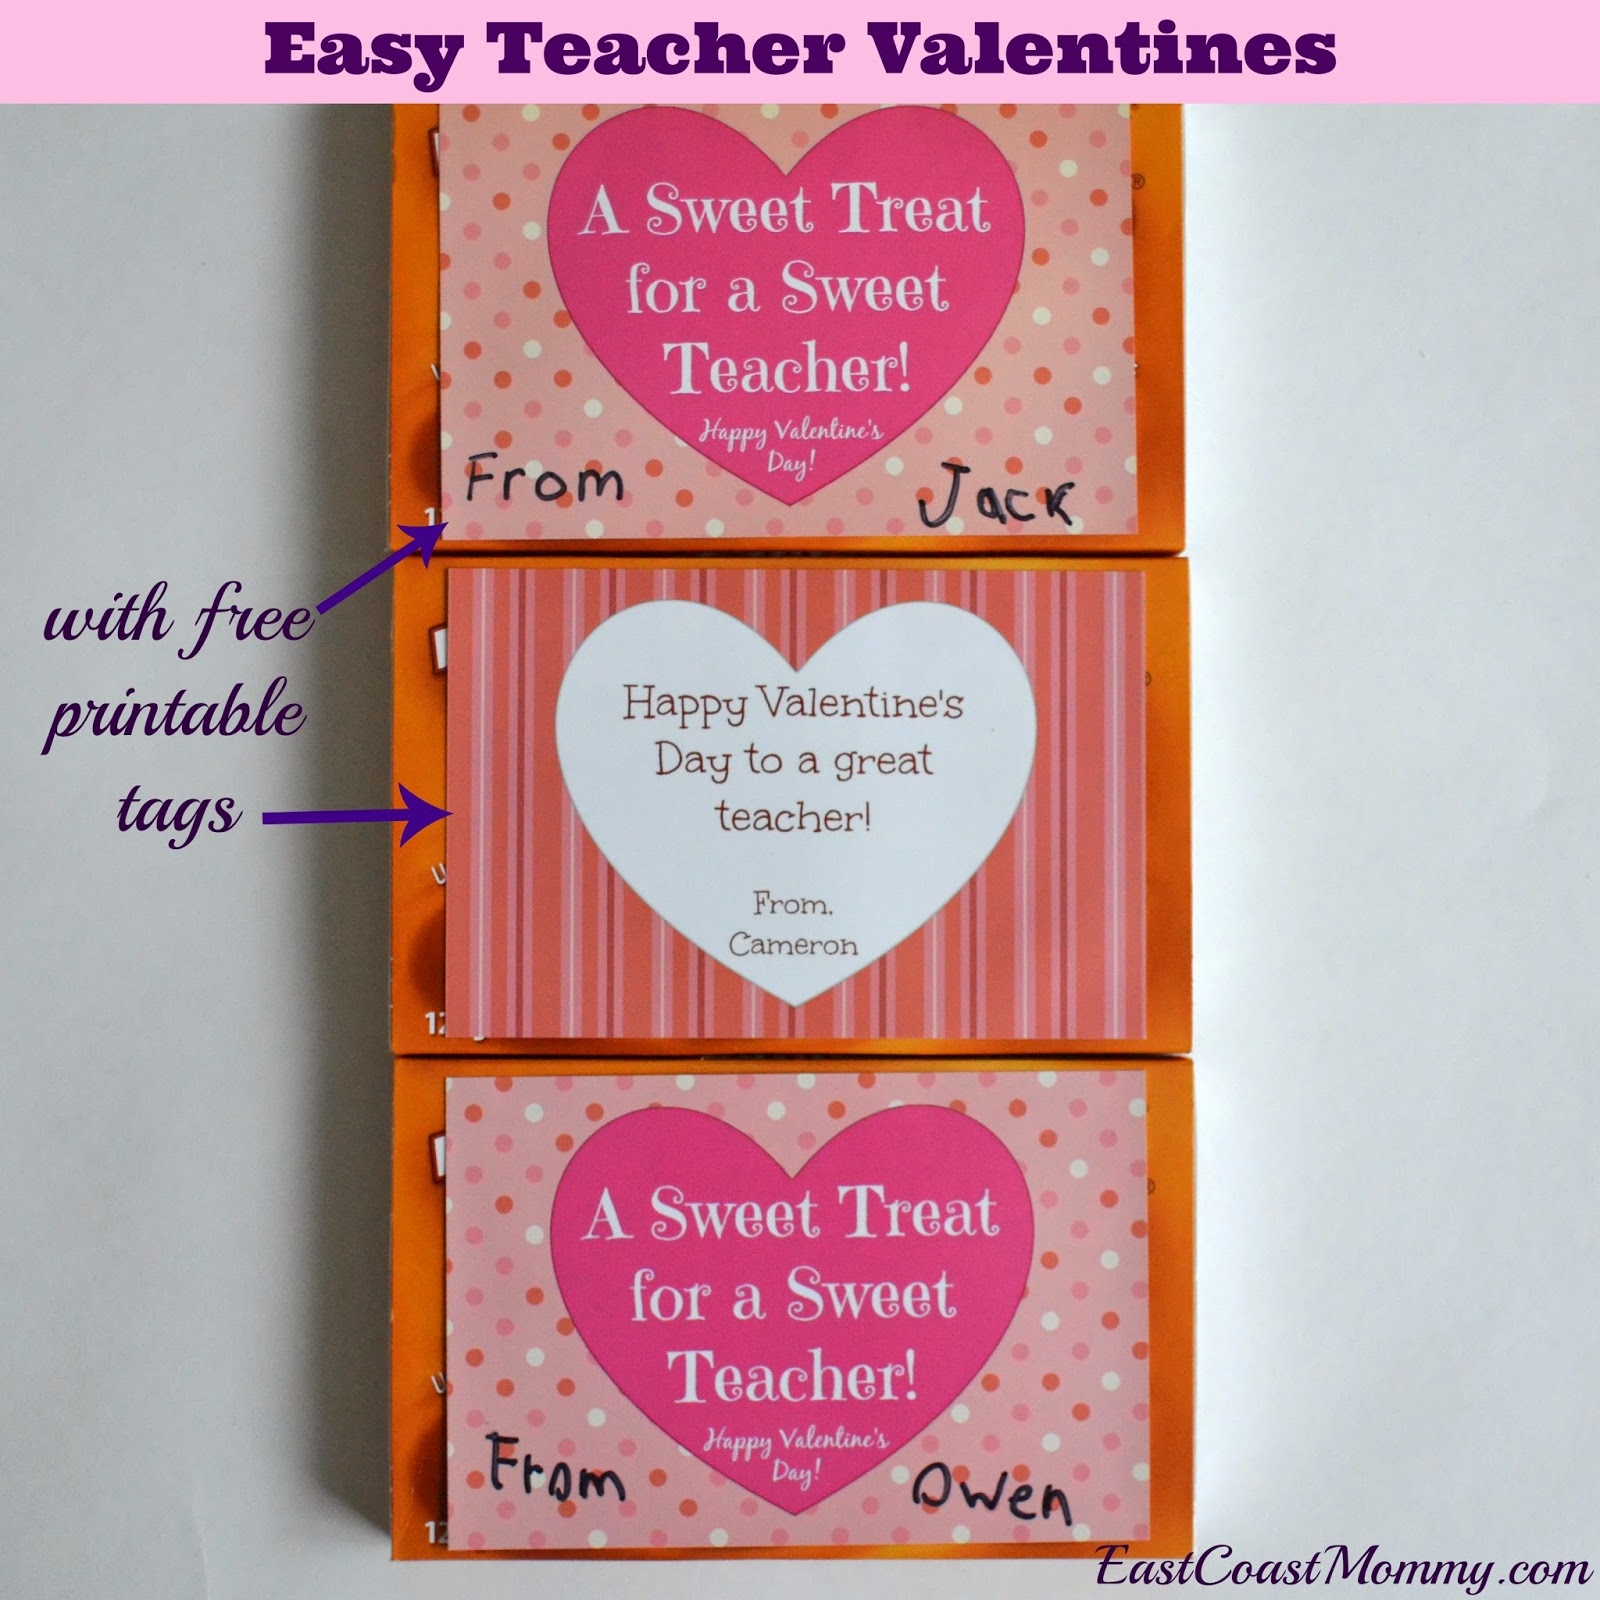 East Coast Mommy Last Minute Teacher Valentines with Free Printable Tags 